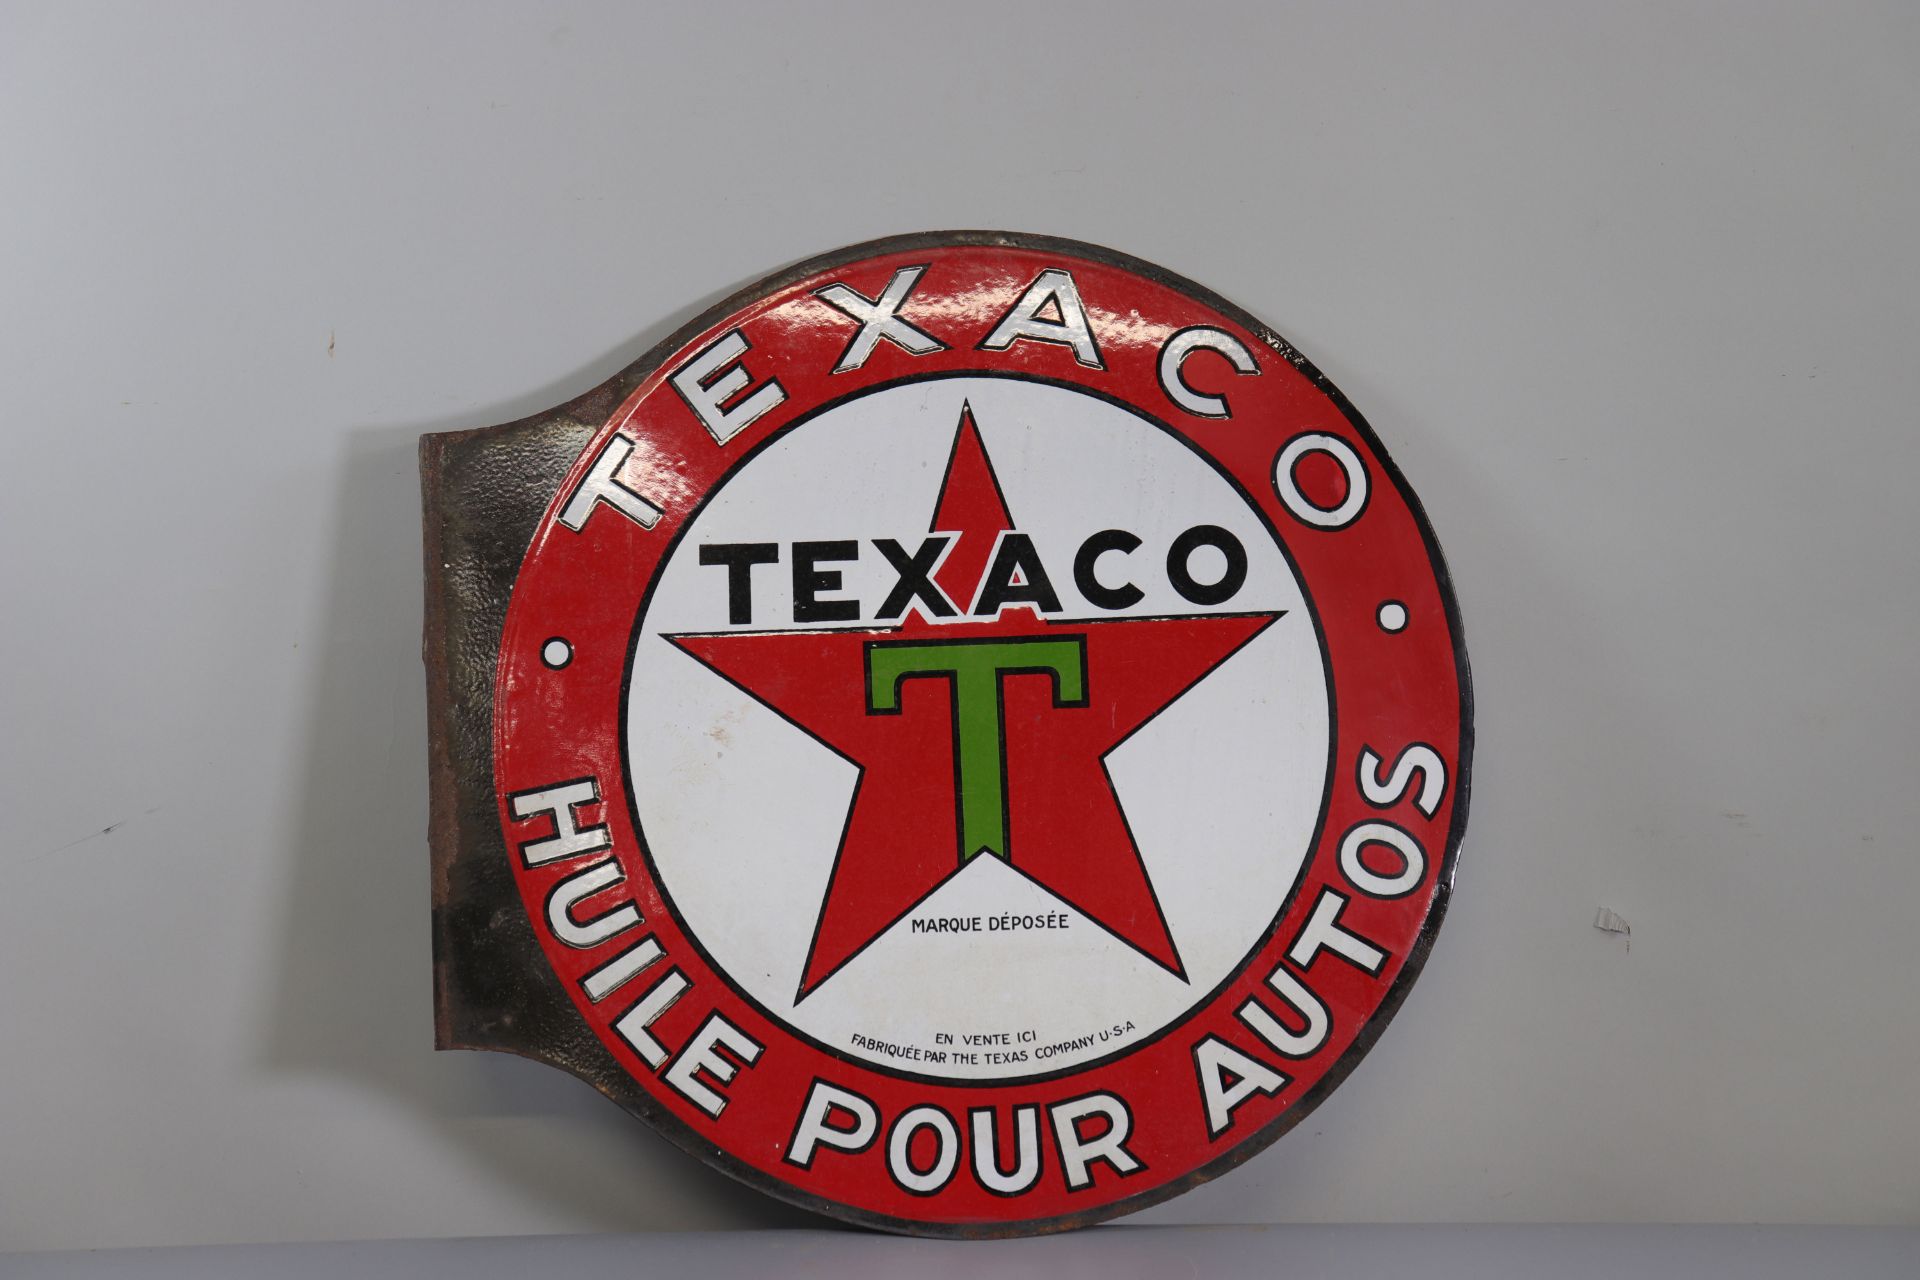 Double-sided Texaco circular sign